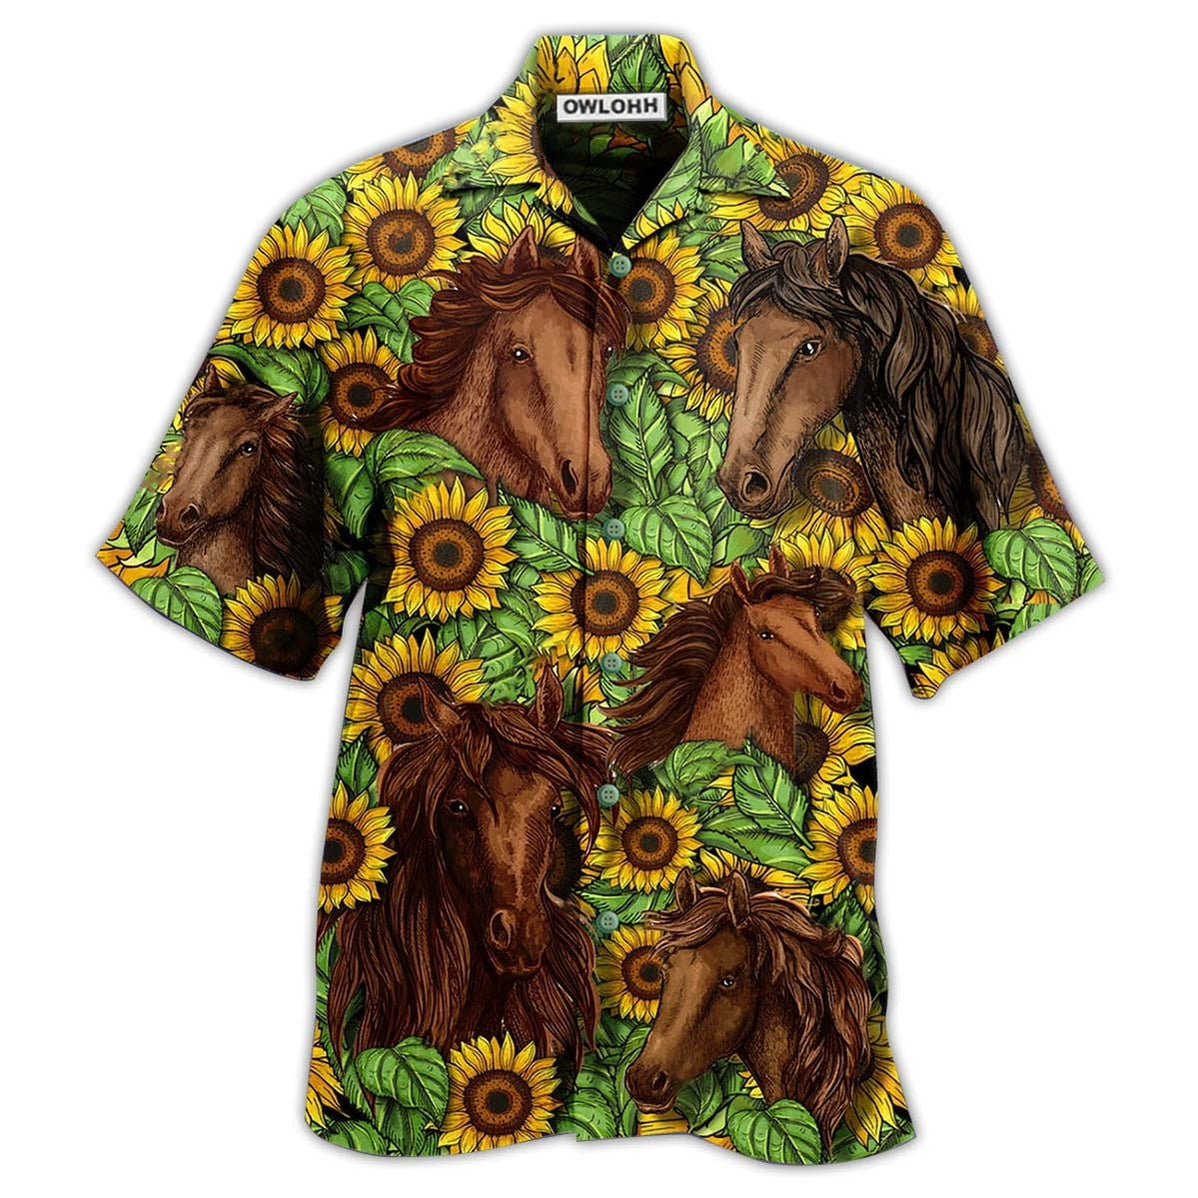 Hawaiian Shirt / Adults / S Horse And Sunflowers Amazing - Hawaiian Shirt - Owls Matrix LTD